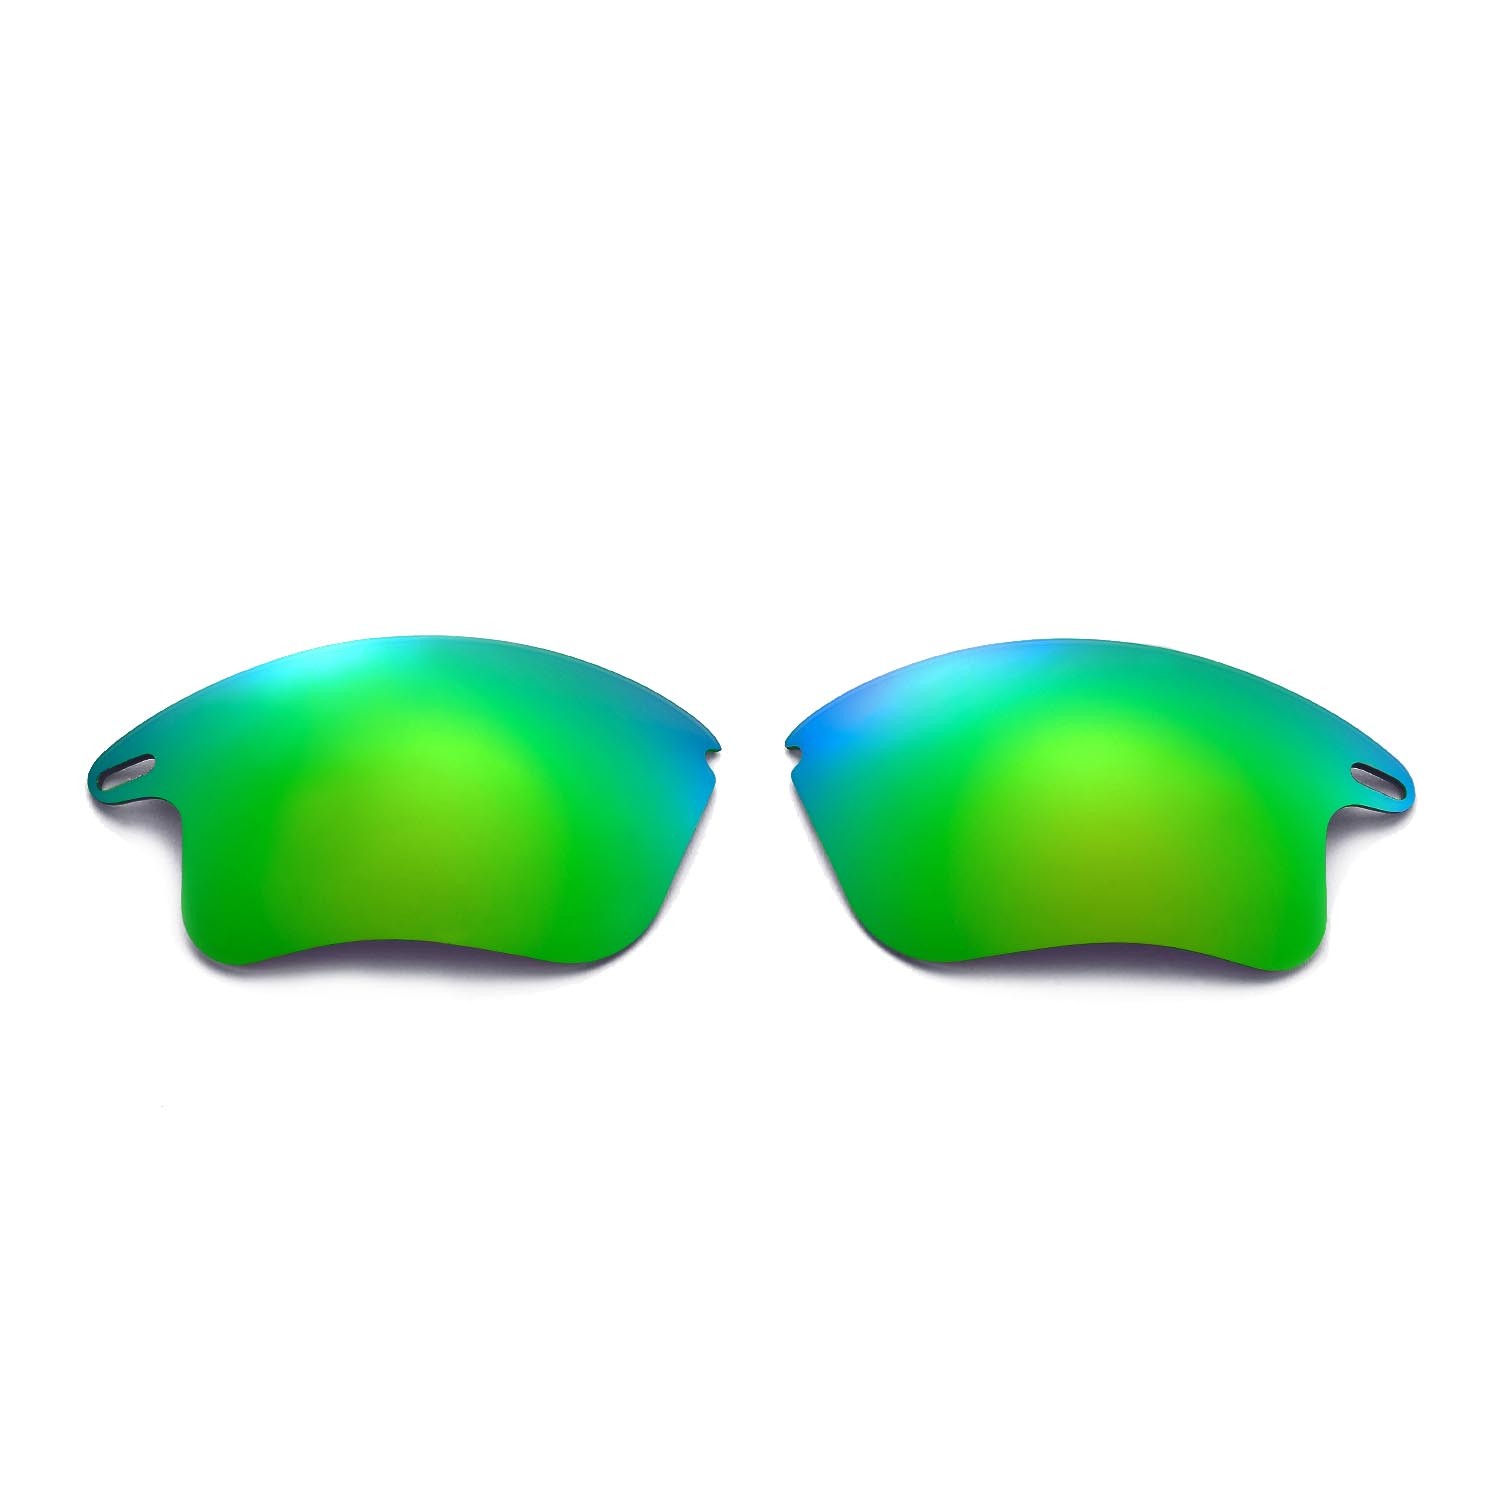 2021 factory directly sale sunglasses lenses sun glasses polarized lens